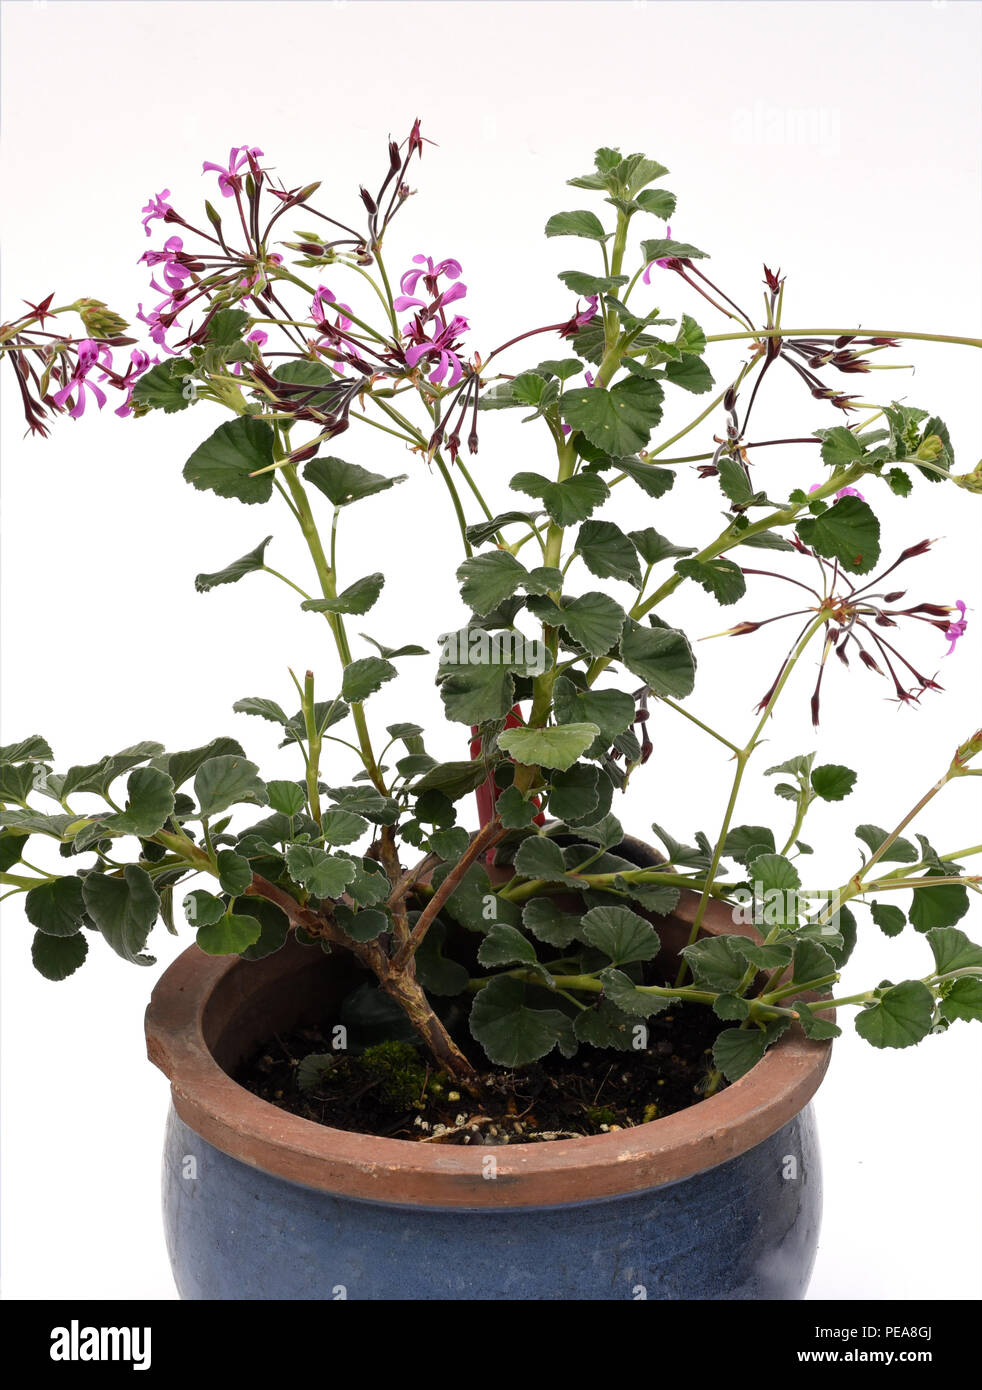 Kapland-Pelargonie, Umckaloabo, Pelargonium, reniforme, Heil-Pelargonie Stock Photo